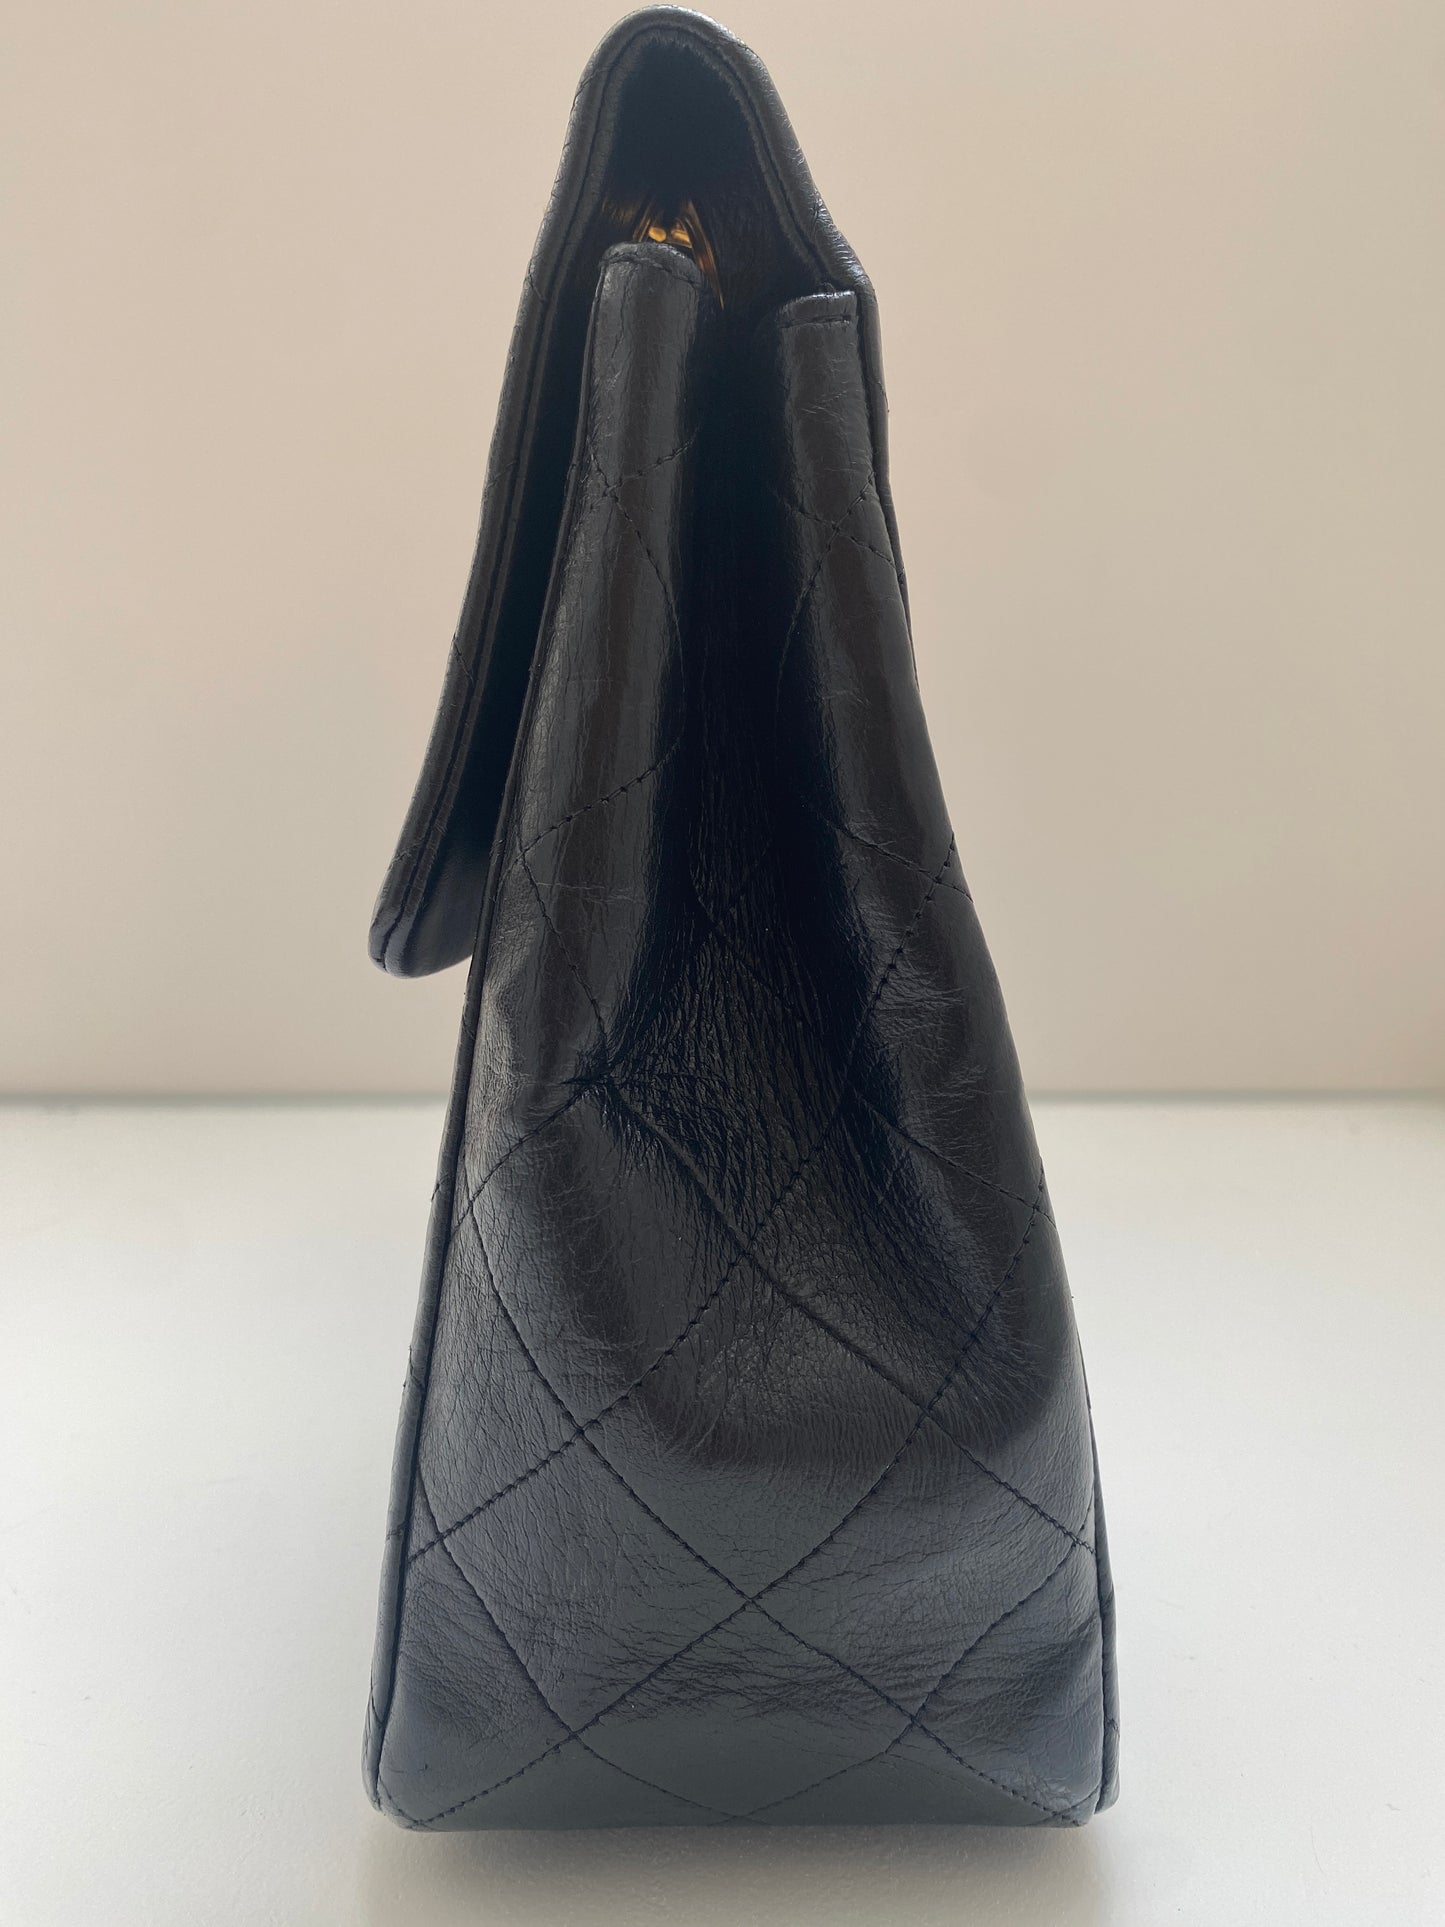 Chanel Vintage Black Lambskin Maxi Bag